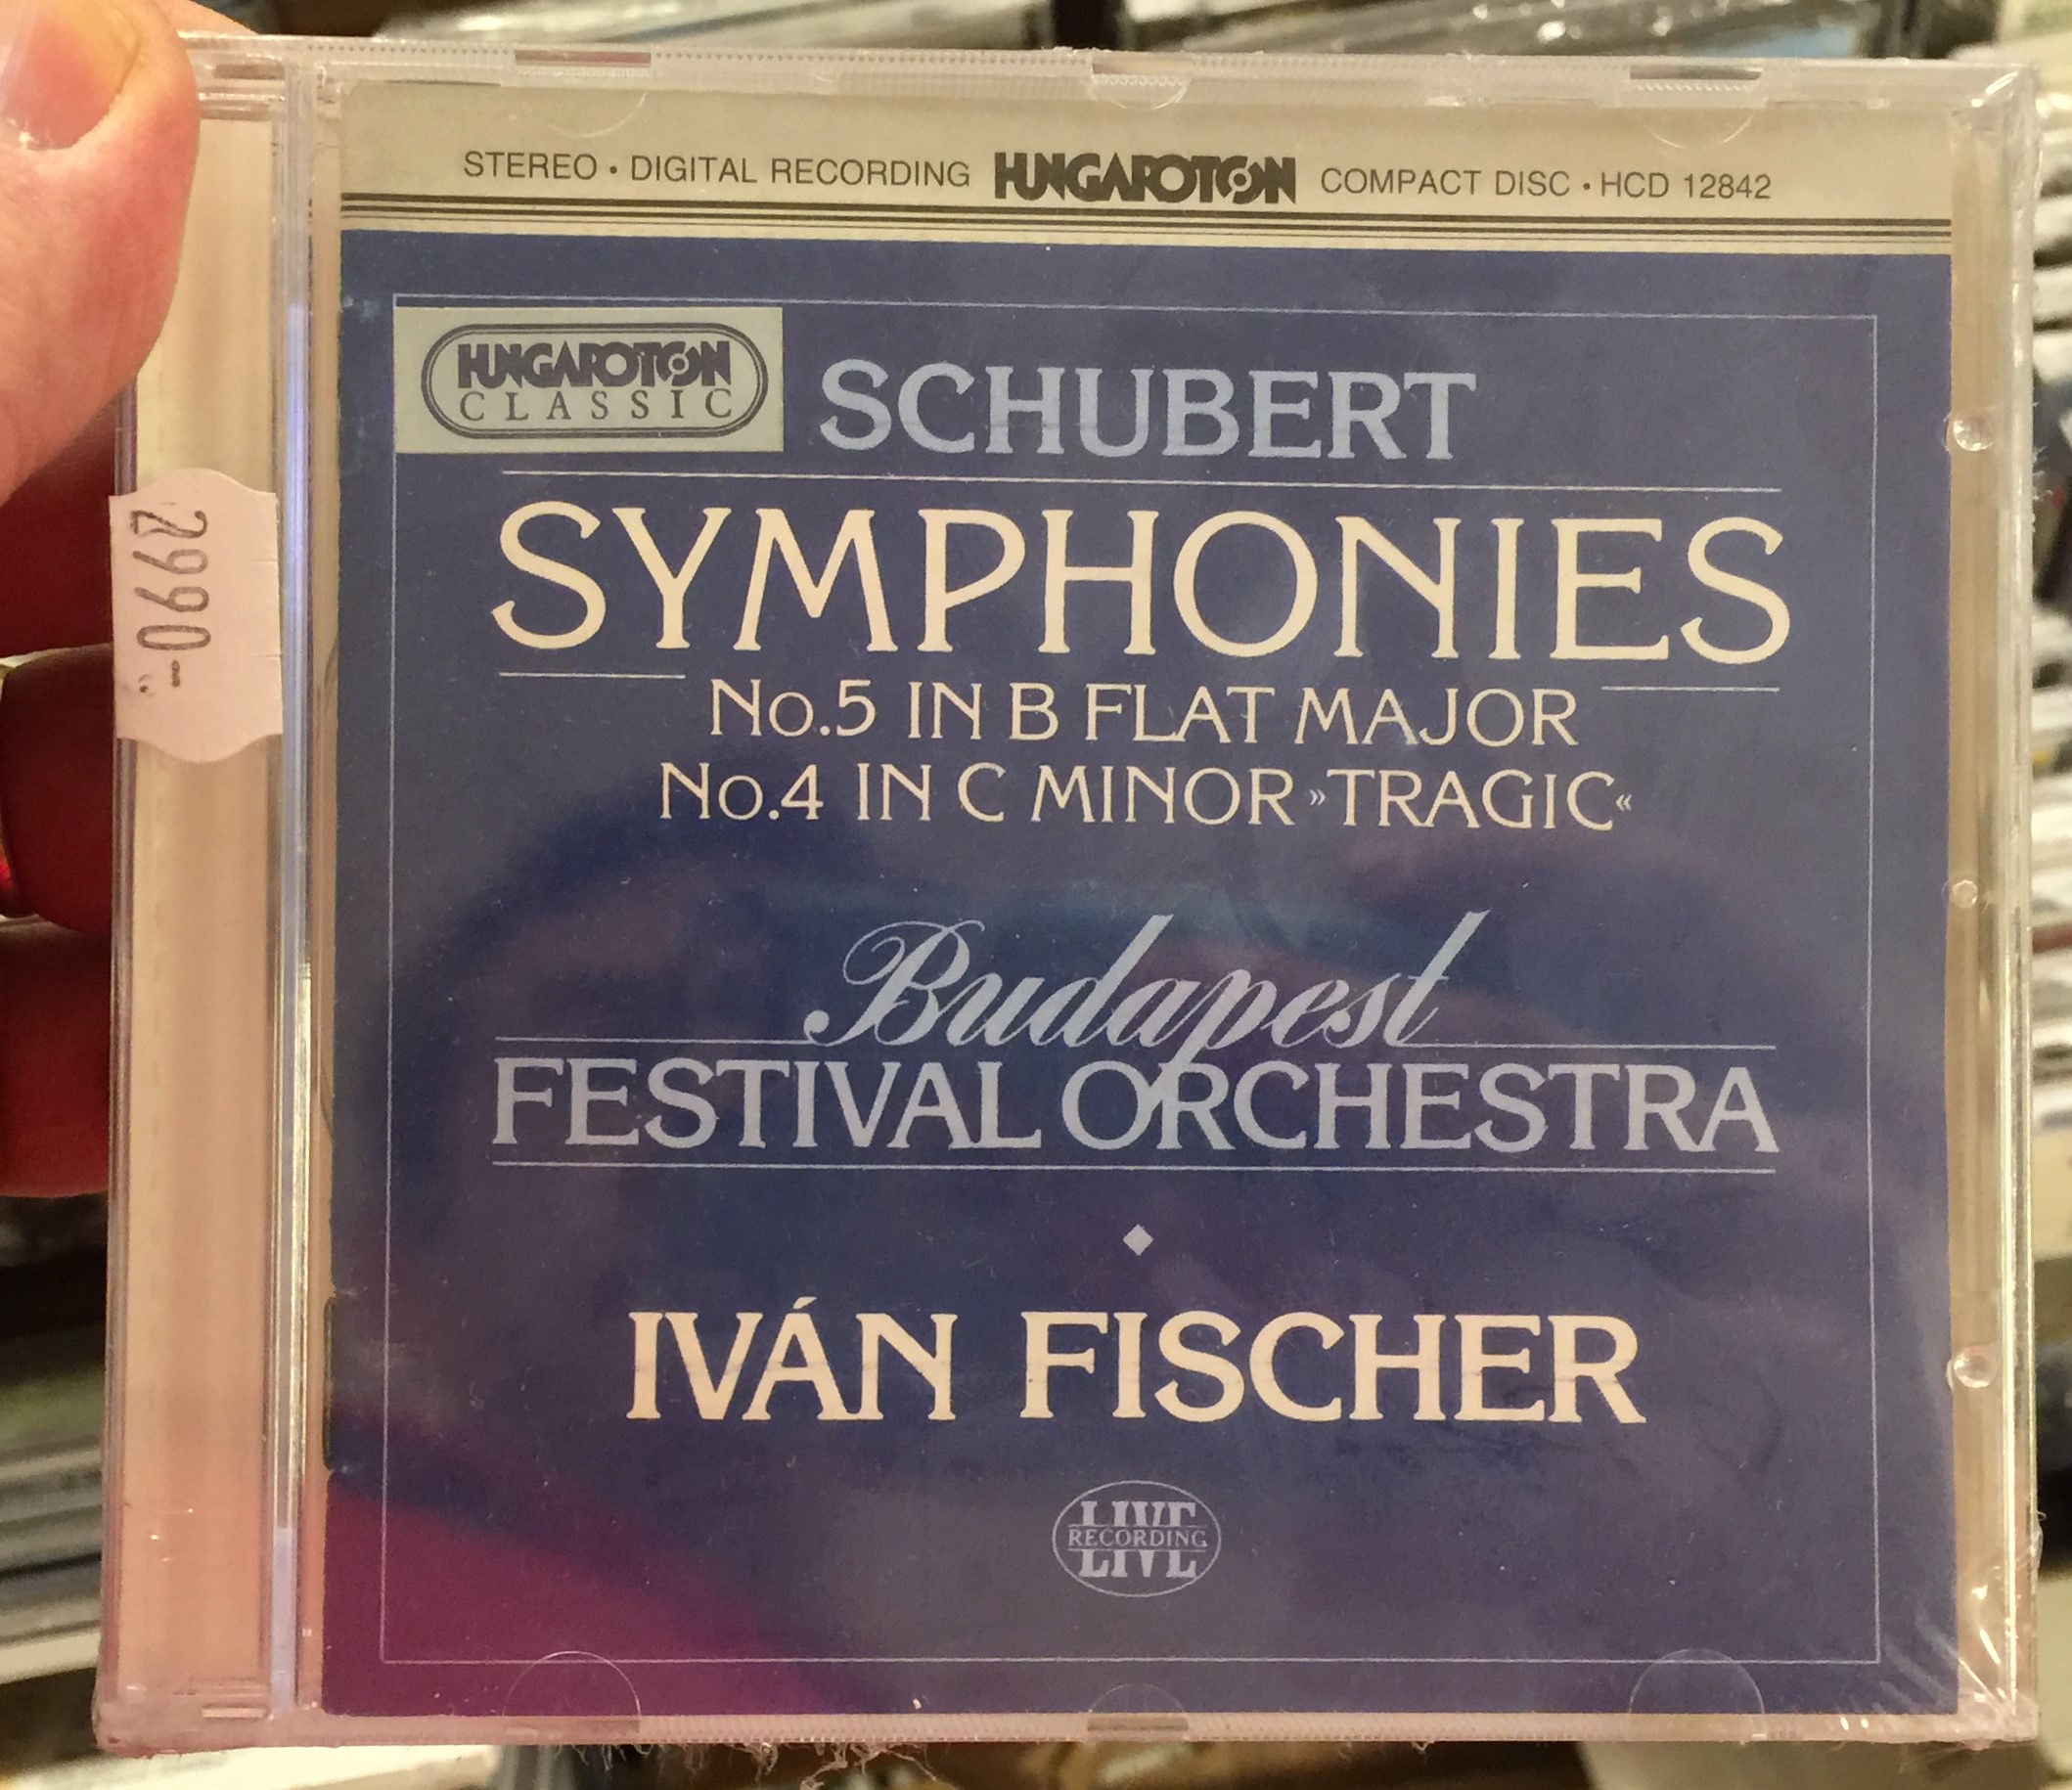 schubert-symphonies-no.5-in-b-flat-major-no.4-in-c-minor-tragic-budapest-festival-orchestra-ivan-fischer-hungaroton-audio-cd-1987-stereo-hcd-12842-1-.jpg